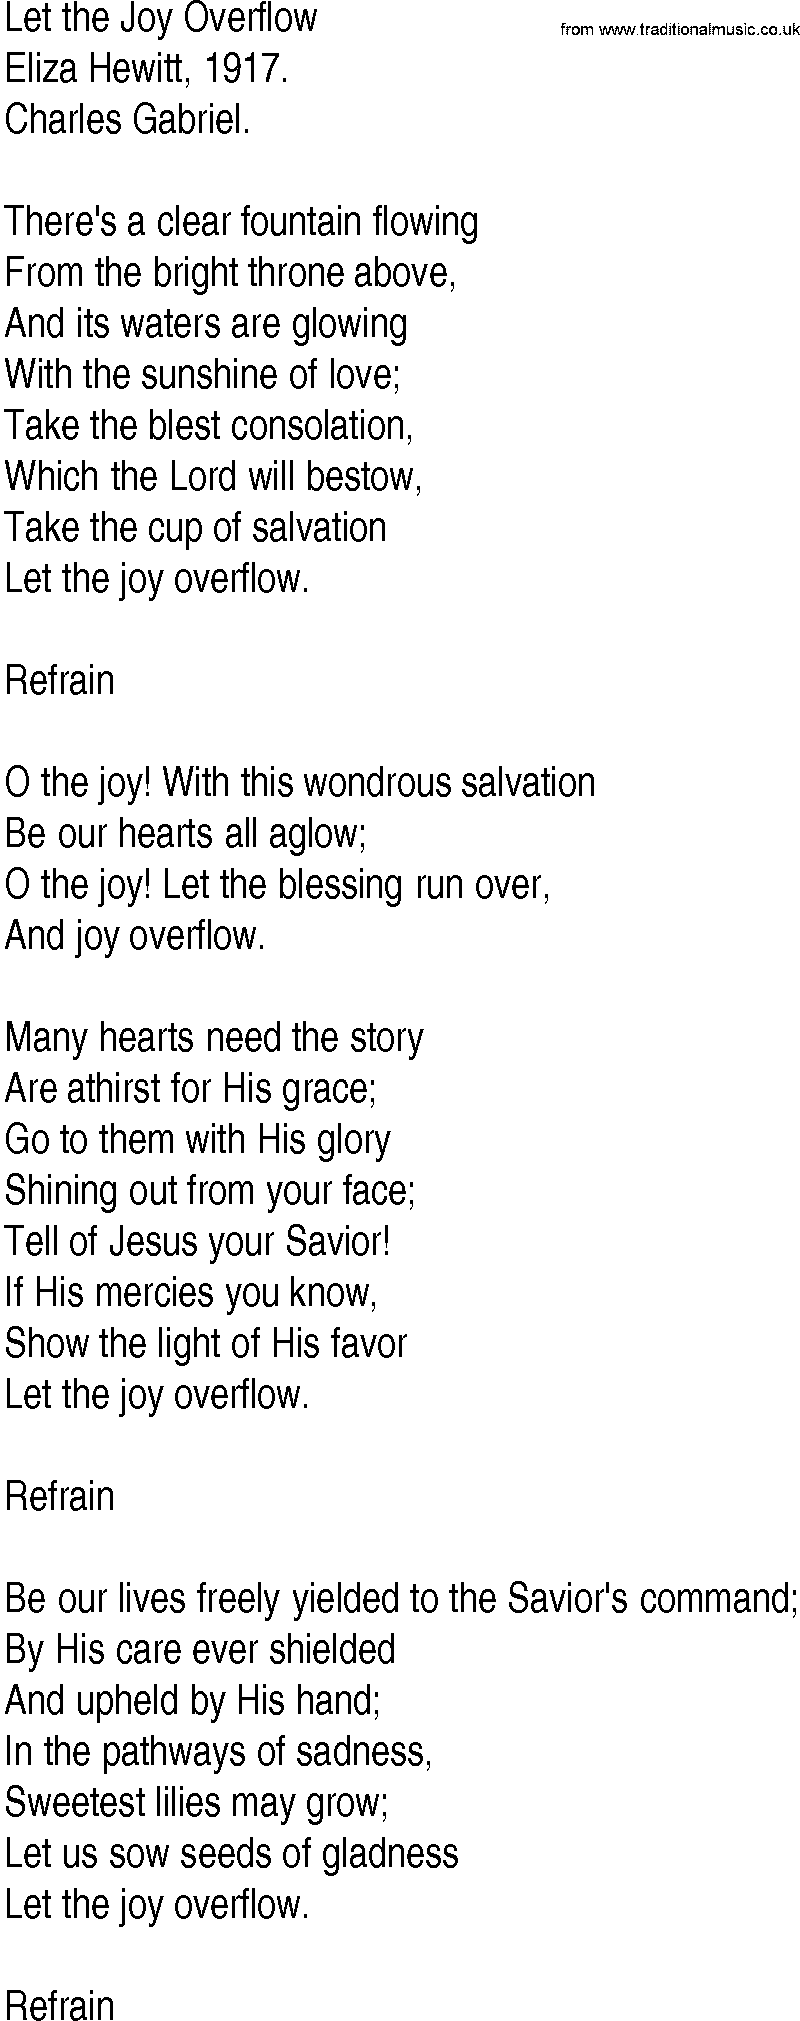 Hymn and Gospel Song: Let the Joy Overflow by Eliza Hewitt lyrics